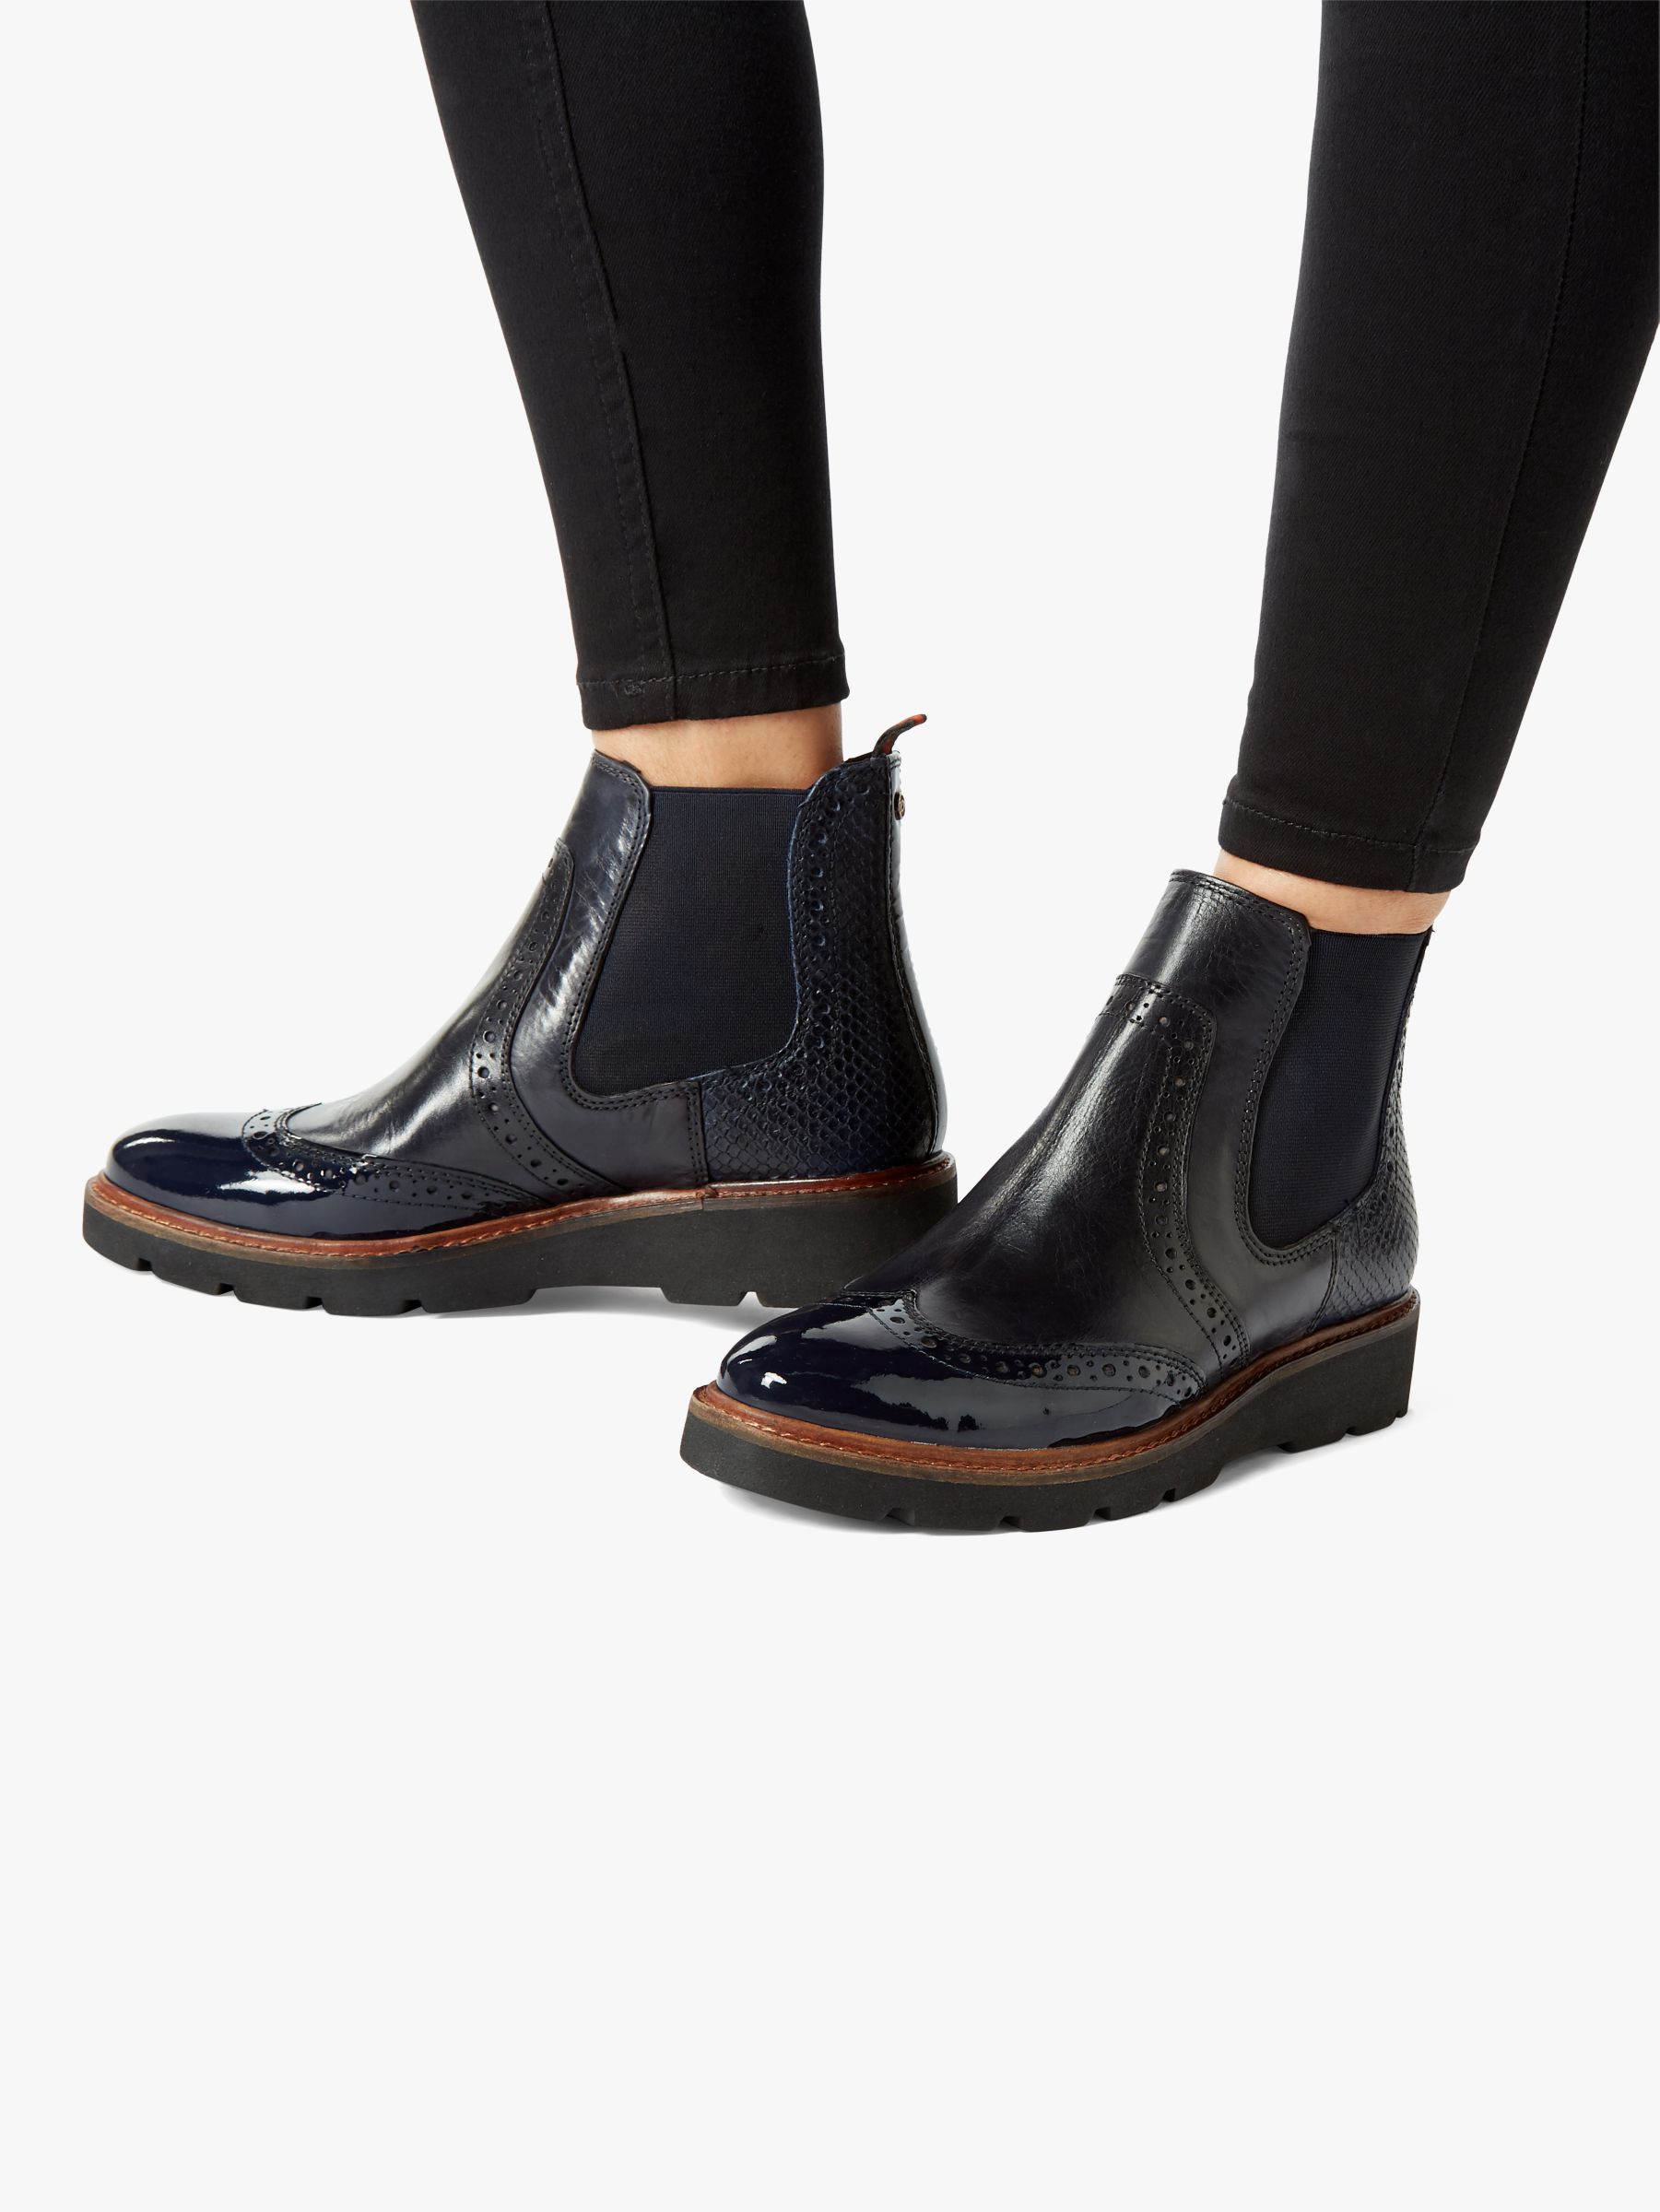 zappos womens steel toe boots